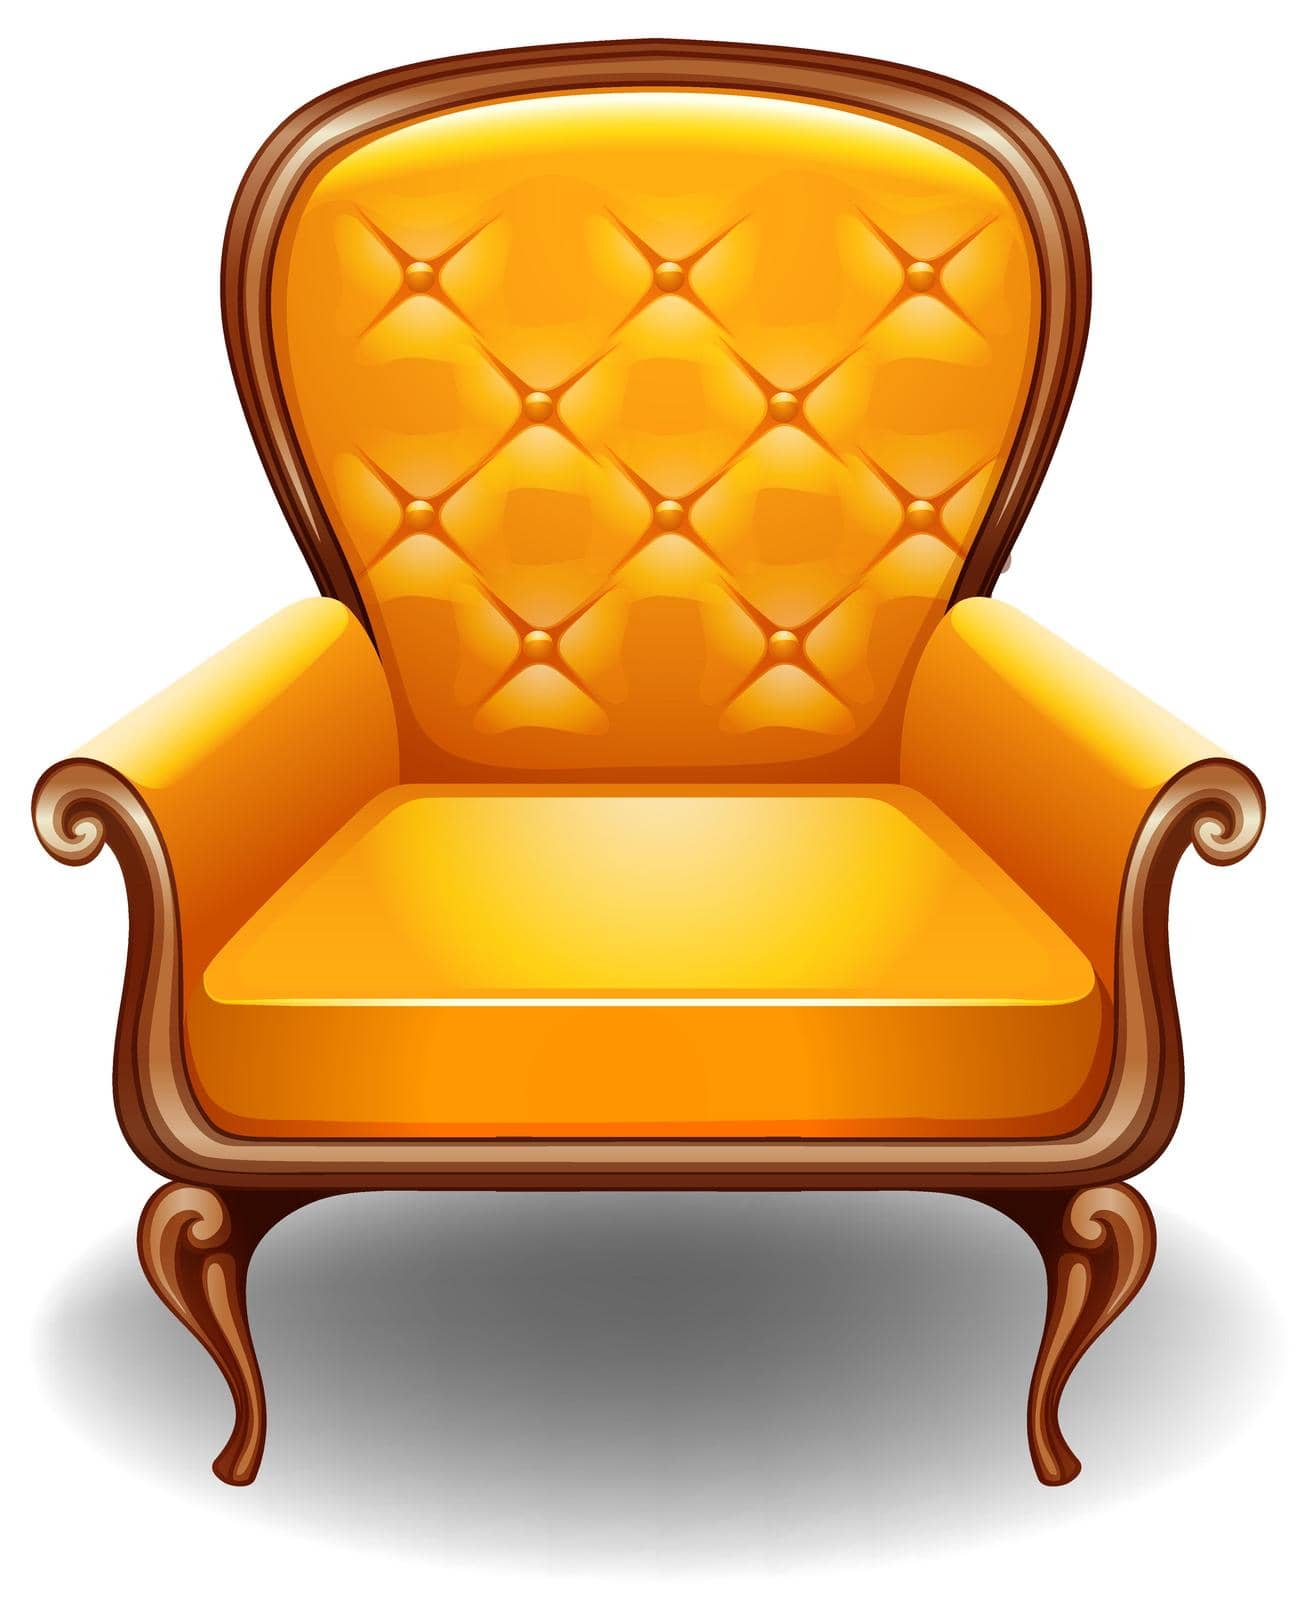 Closeup luxury design of yellow armchair